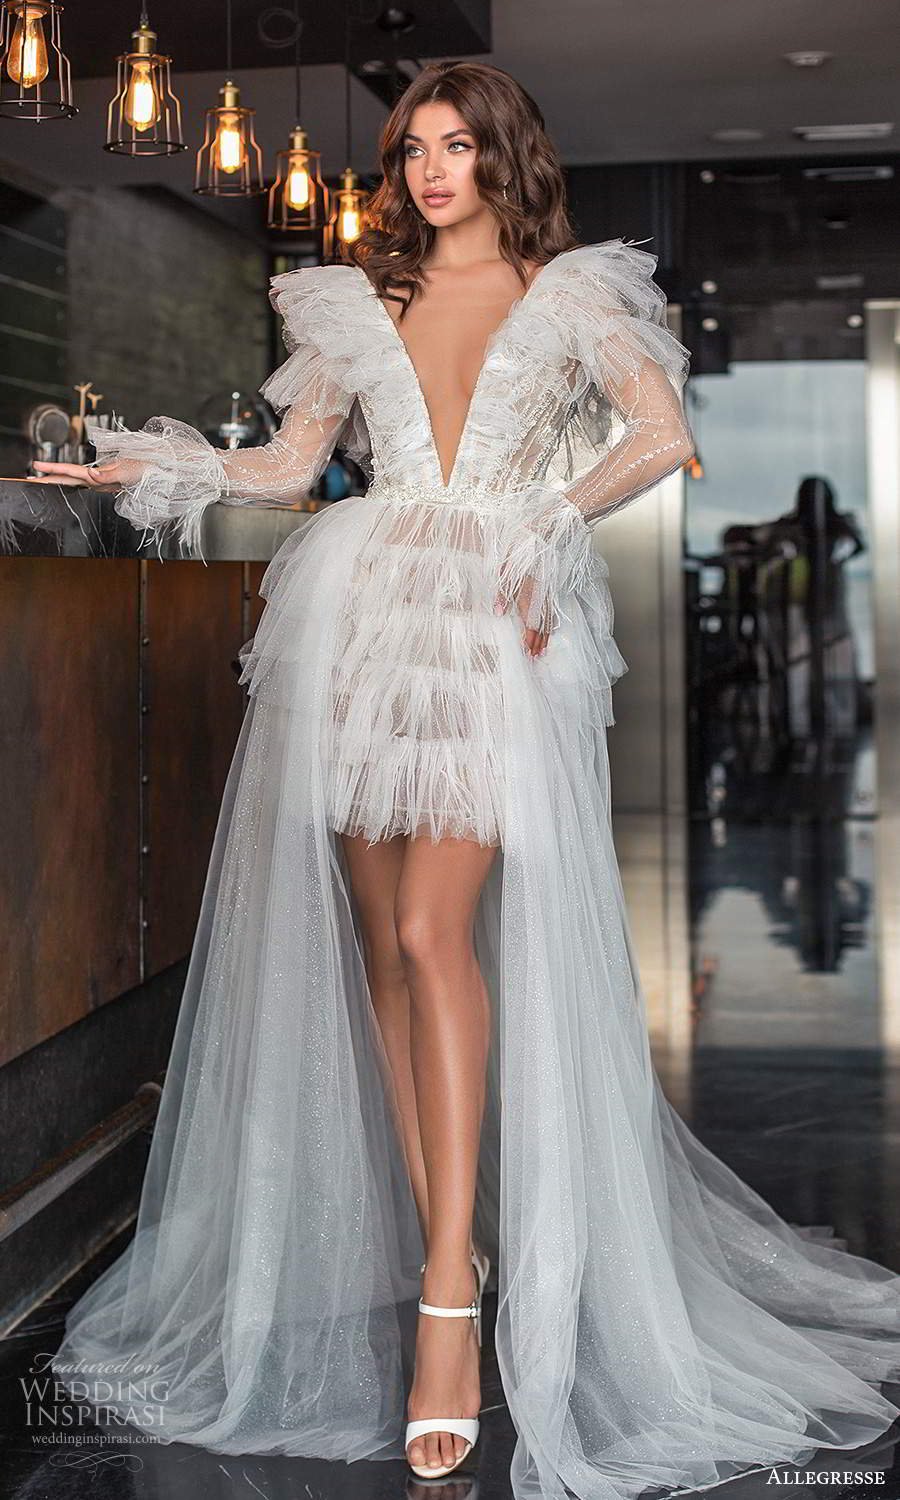 Allegresse 2021 Wedding Dresses — “Timeless Love” Bridal Collection